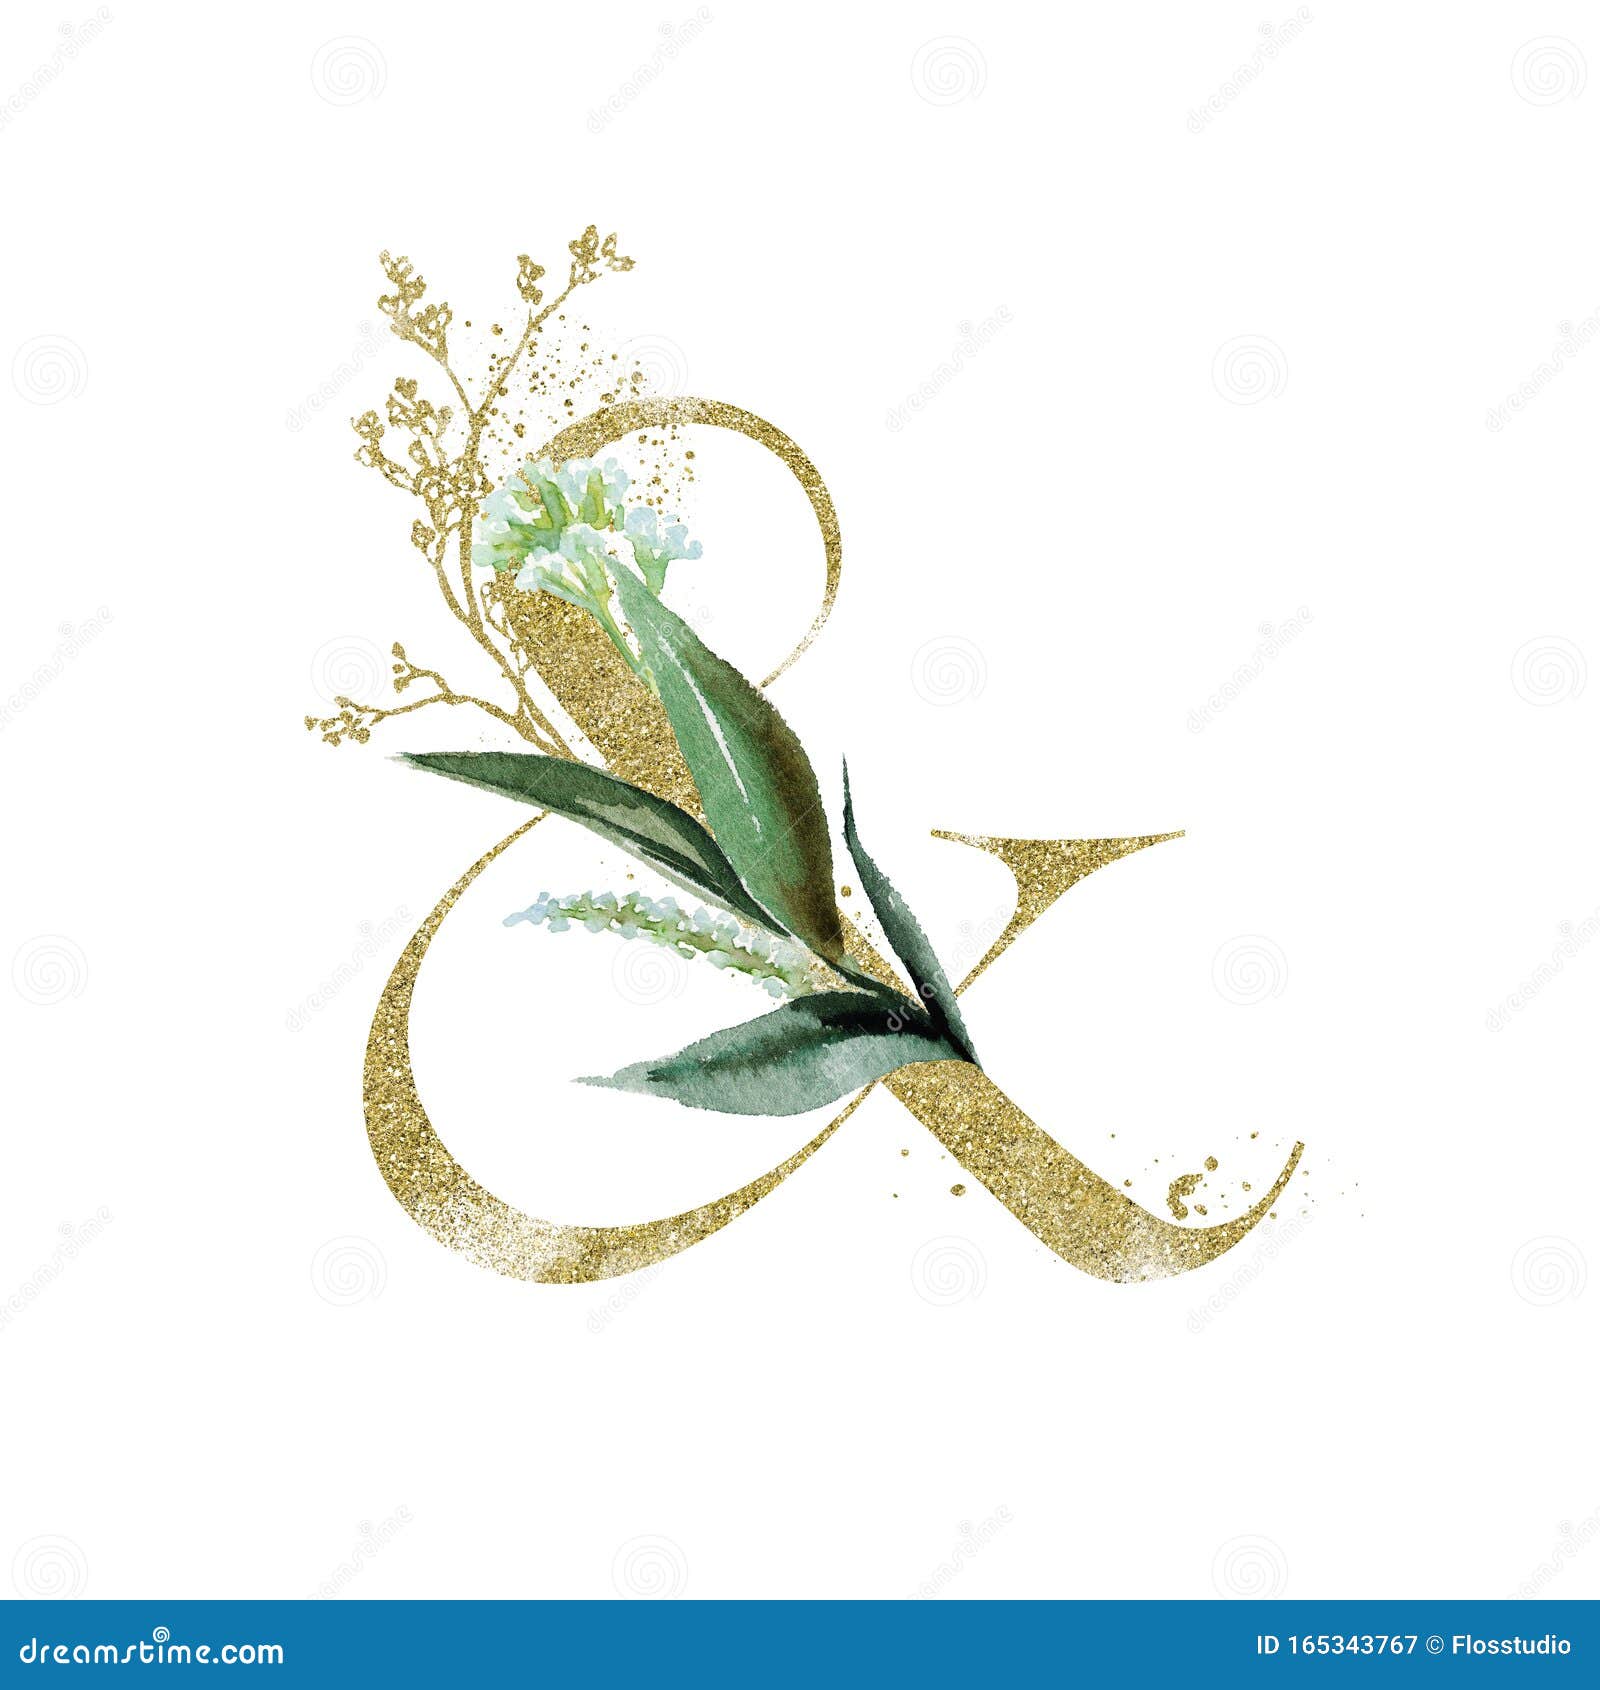 gold floral alphabet - ampersand & with botanic branch bouquet composition. unique collection for wedding invites decoration &